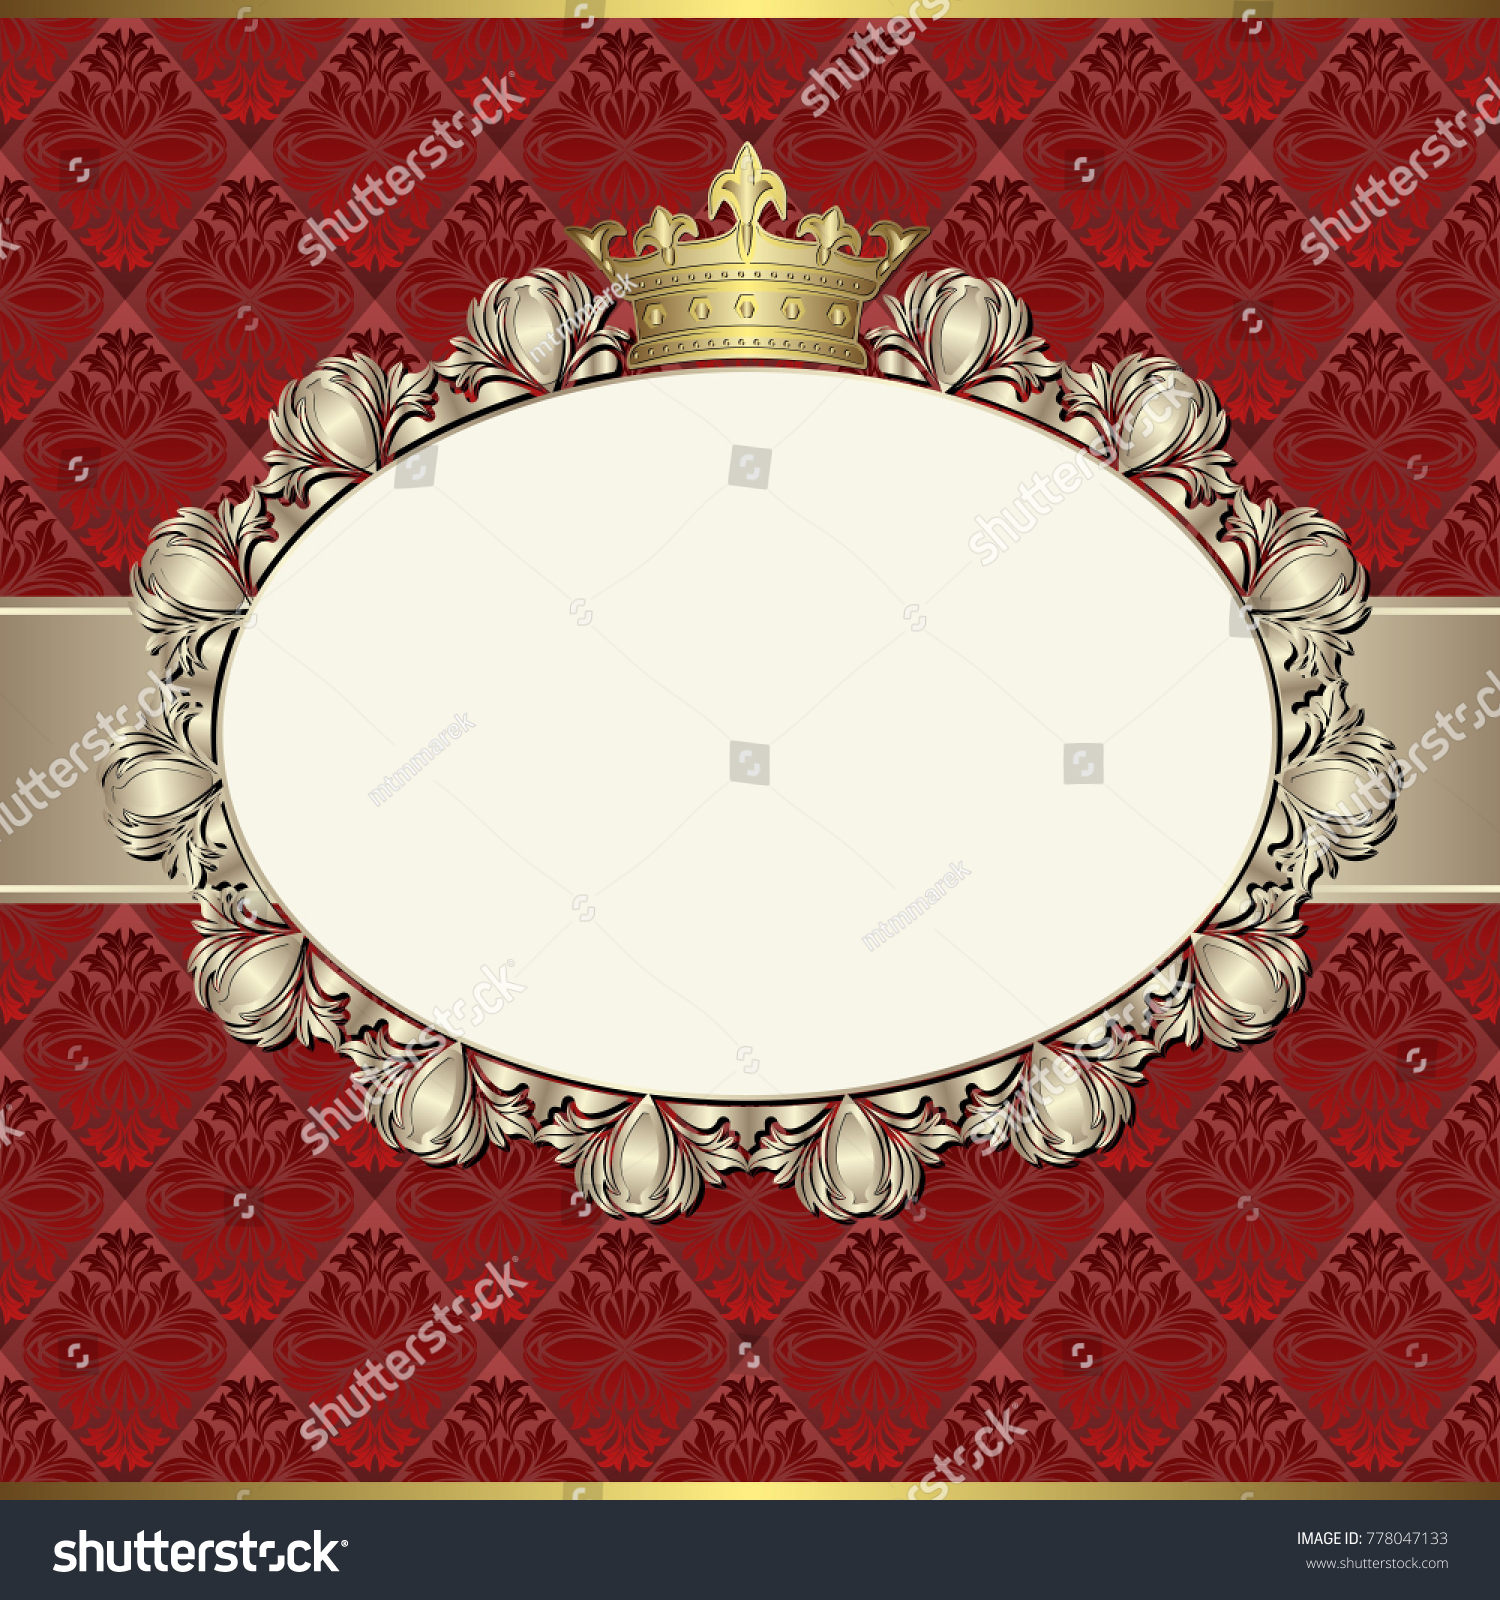 Kingly Background Decorative Frame Stock Vector Royalty